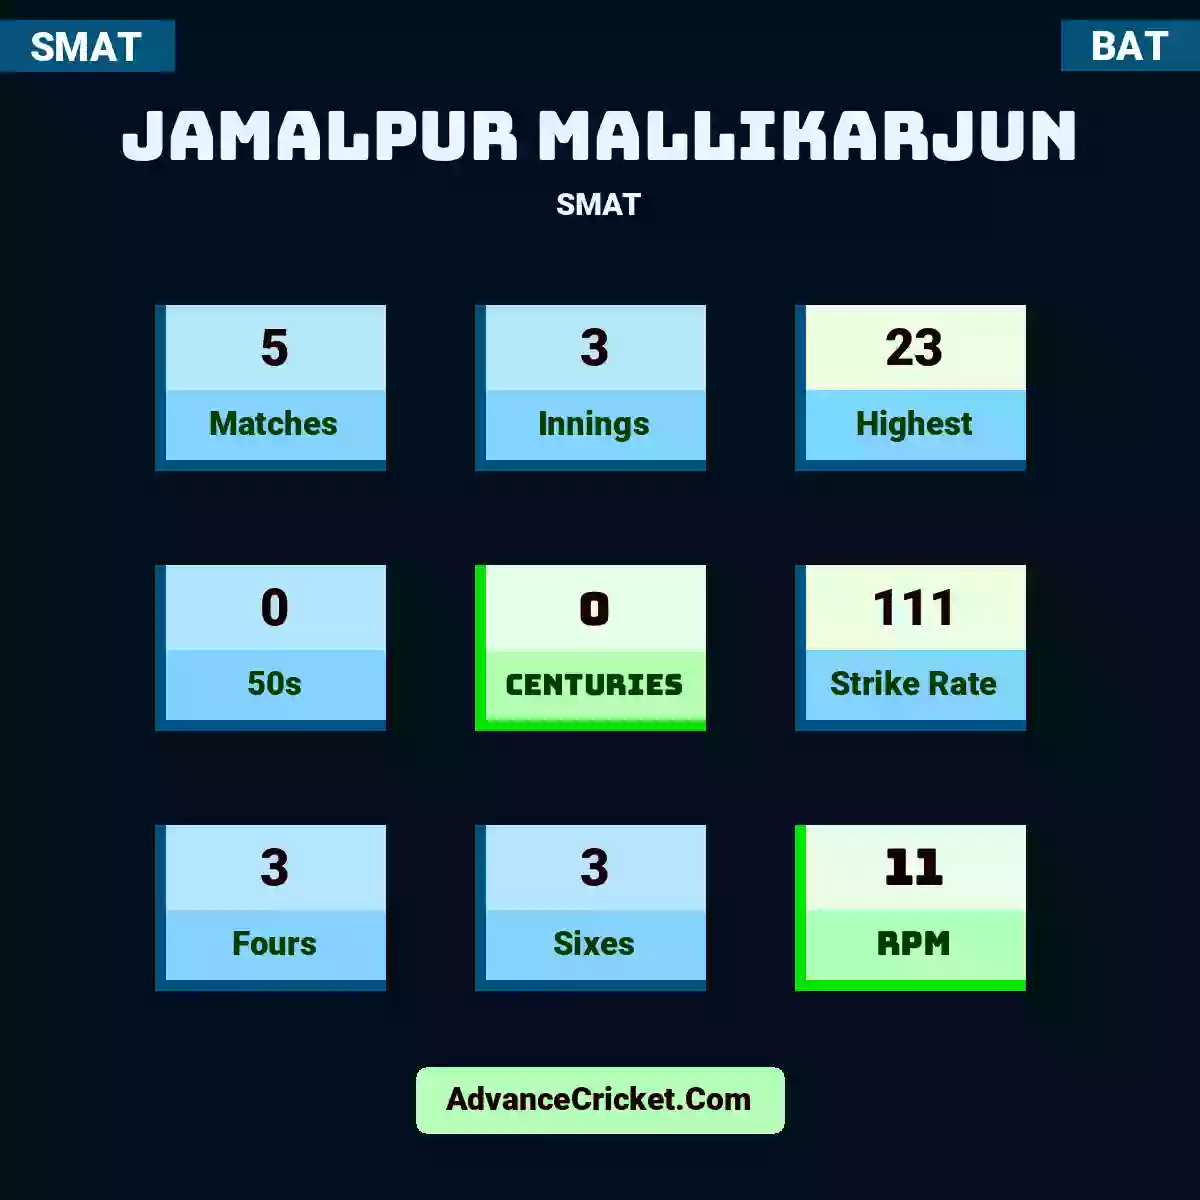 Jamalpur Mallikarjun SMAT , Jamalpur Mallikarjun played 5 matches, scored 23 runs as highest, 0 half-centuries, and 0 centuries, with a strike rate of 111. J.Mallikarjun hit 3 fours and 3 sixes, with an RPM of 11.